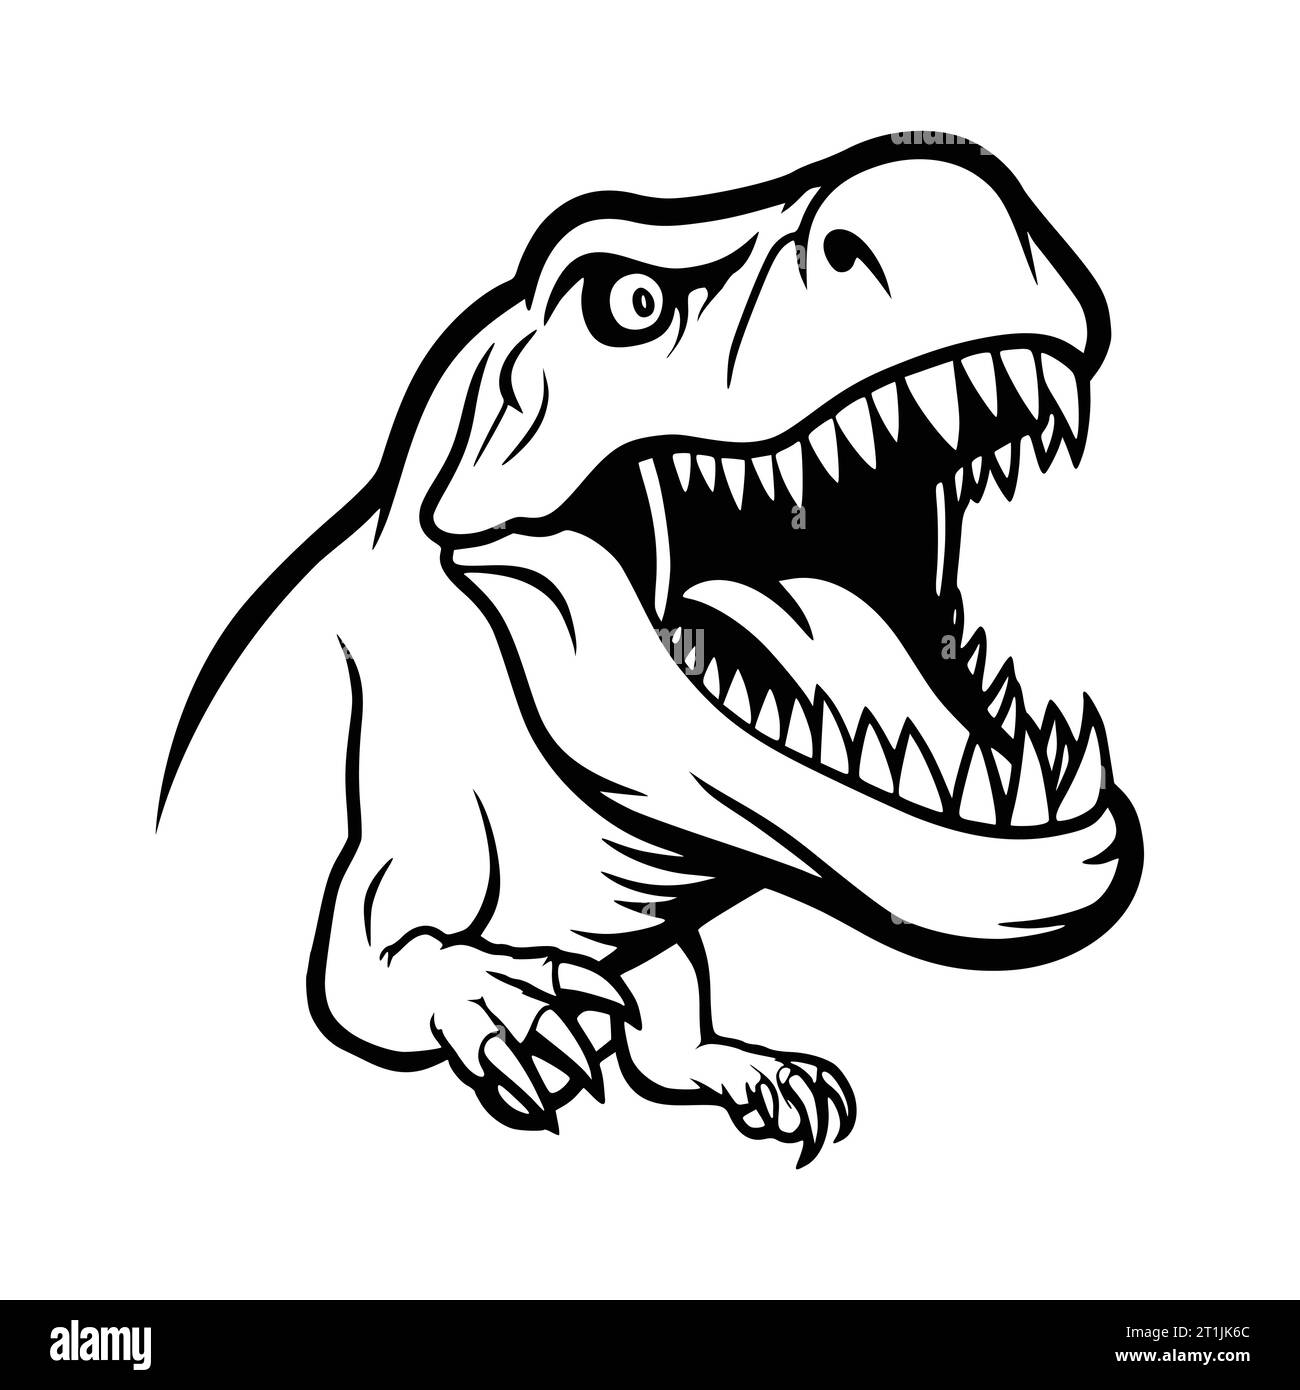 tyrannosaurus dinosaur reptilian wild animal head illustration for logo or symbol Stock Vector